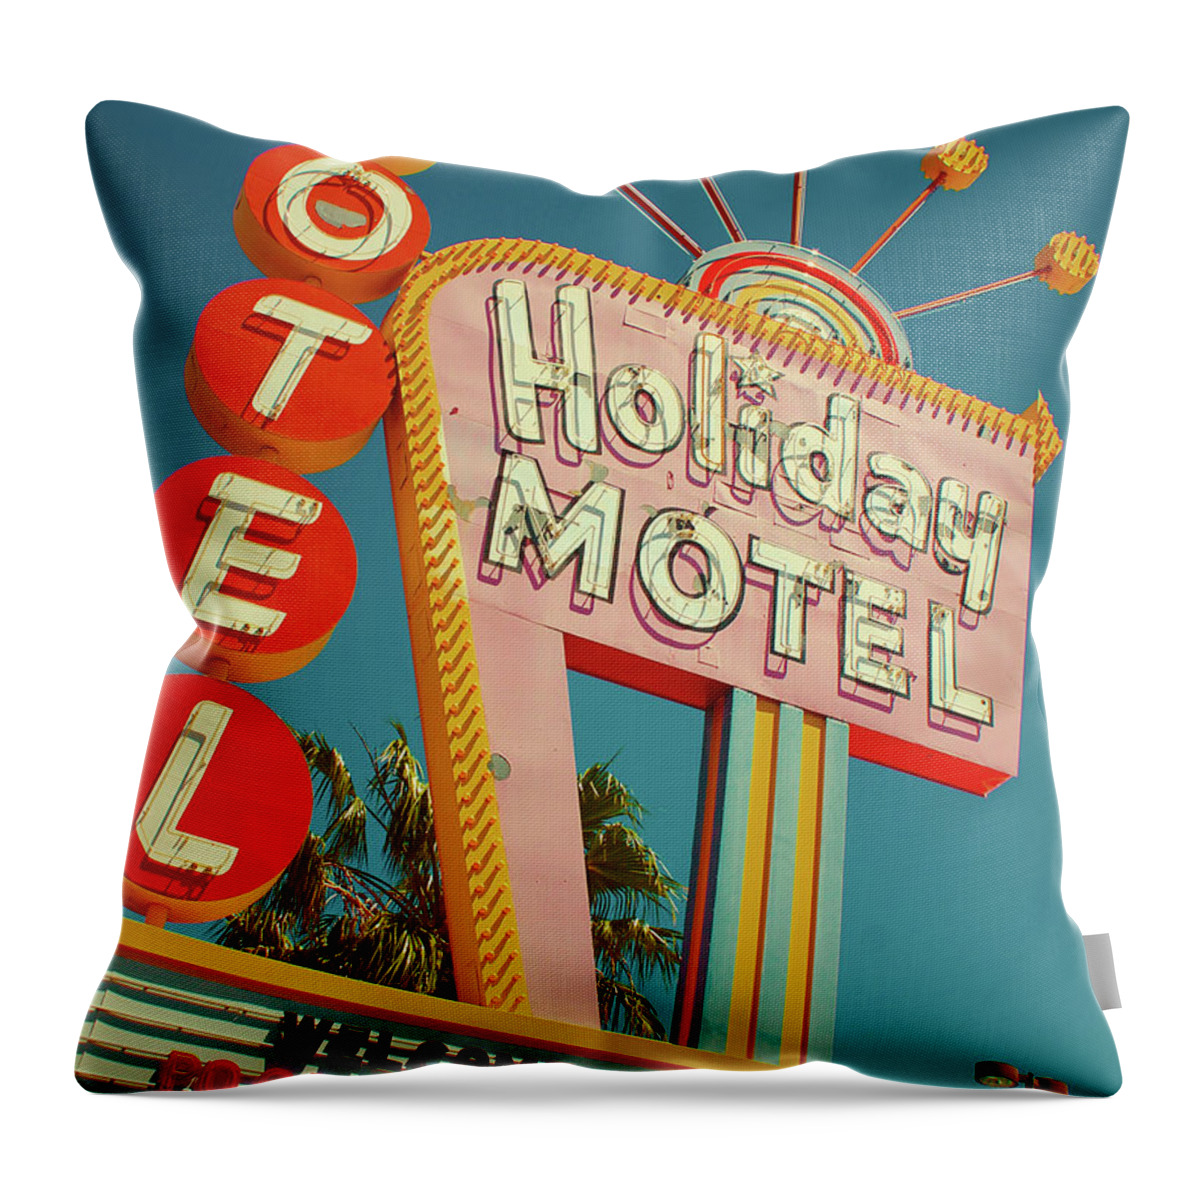 Las Vegas Throw Pillow featuring the photograph Holiday Motel, Las Vegas by Jim Zahniser